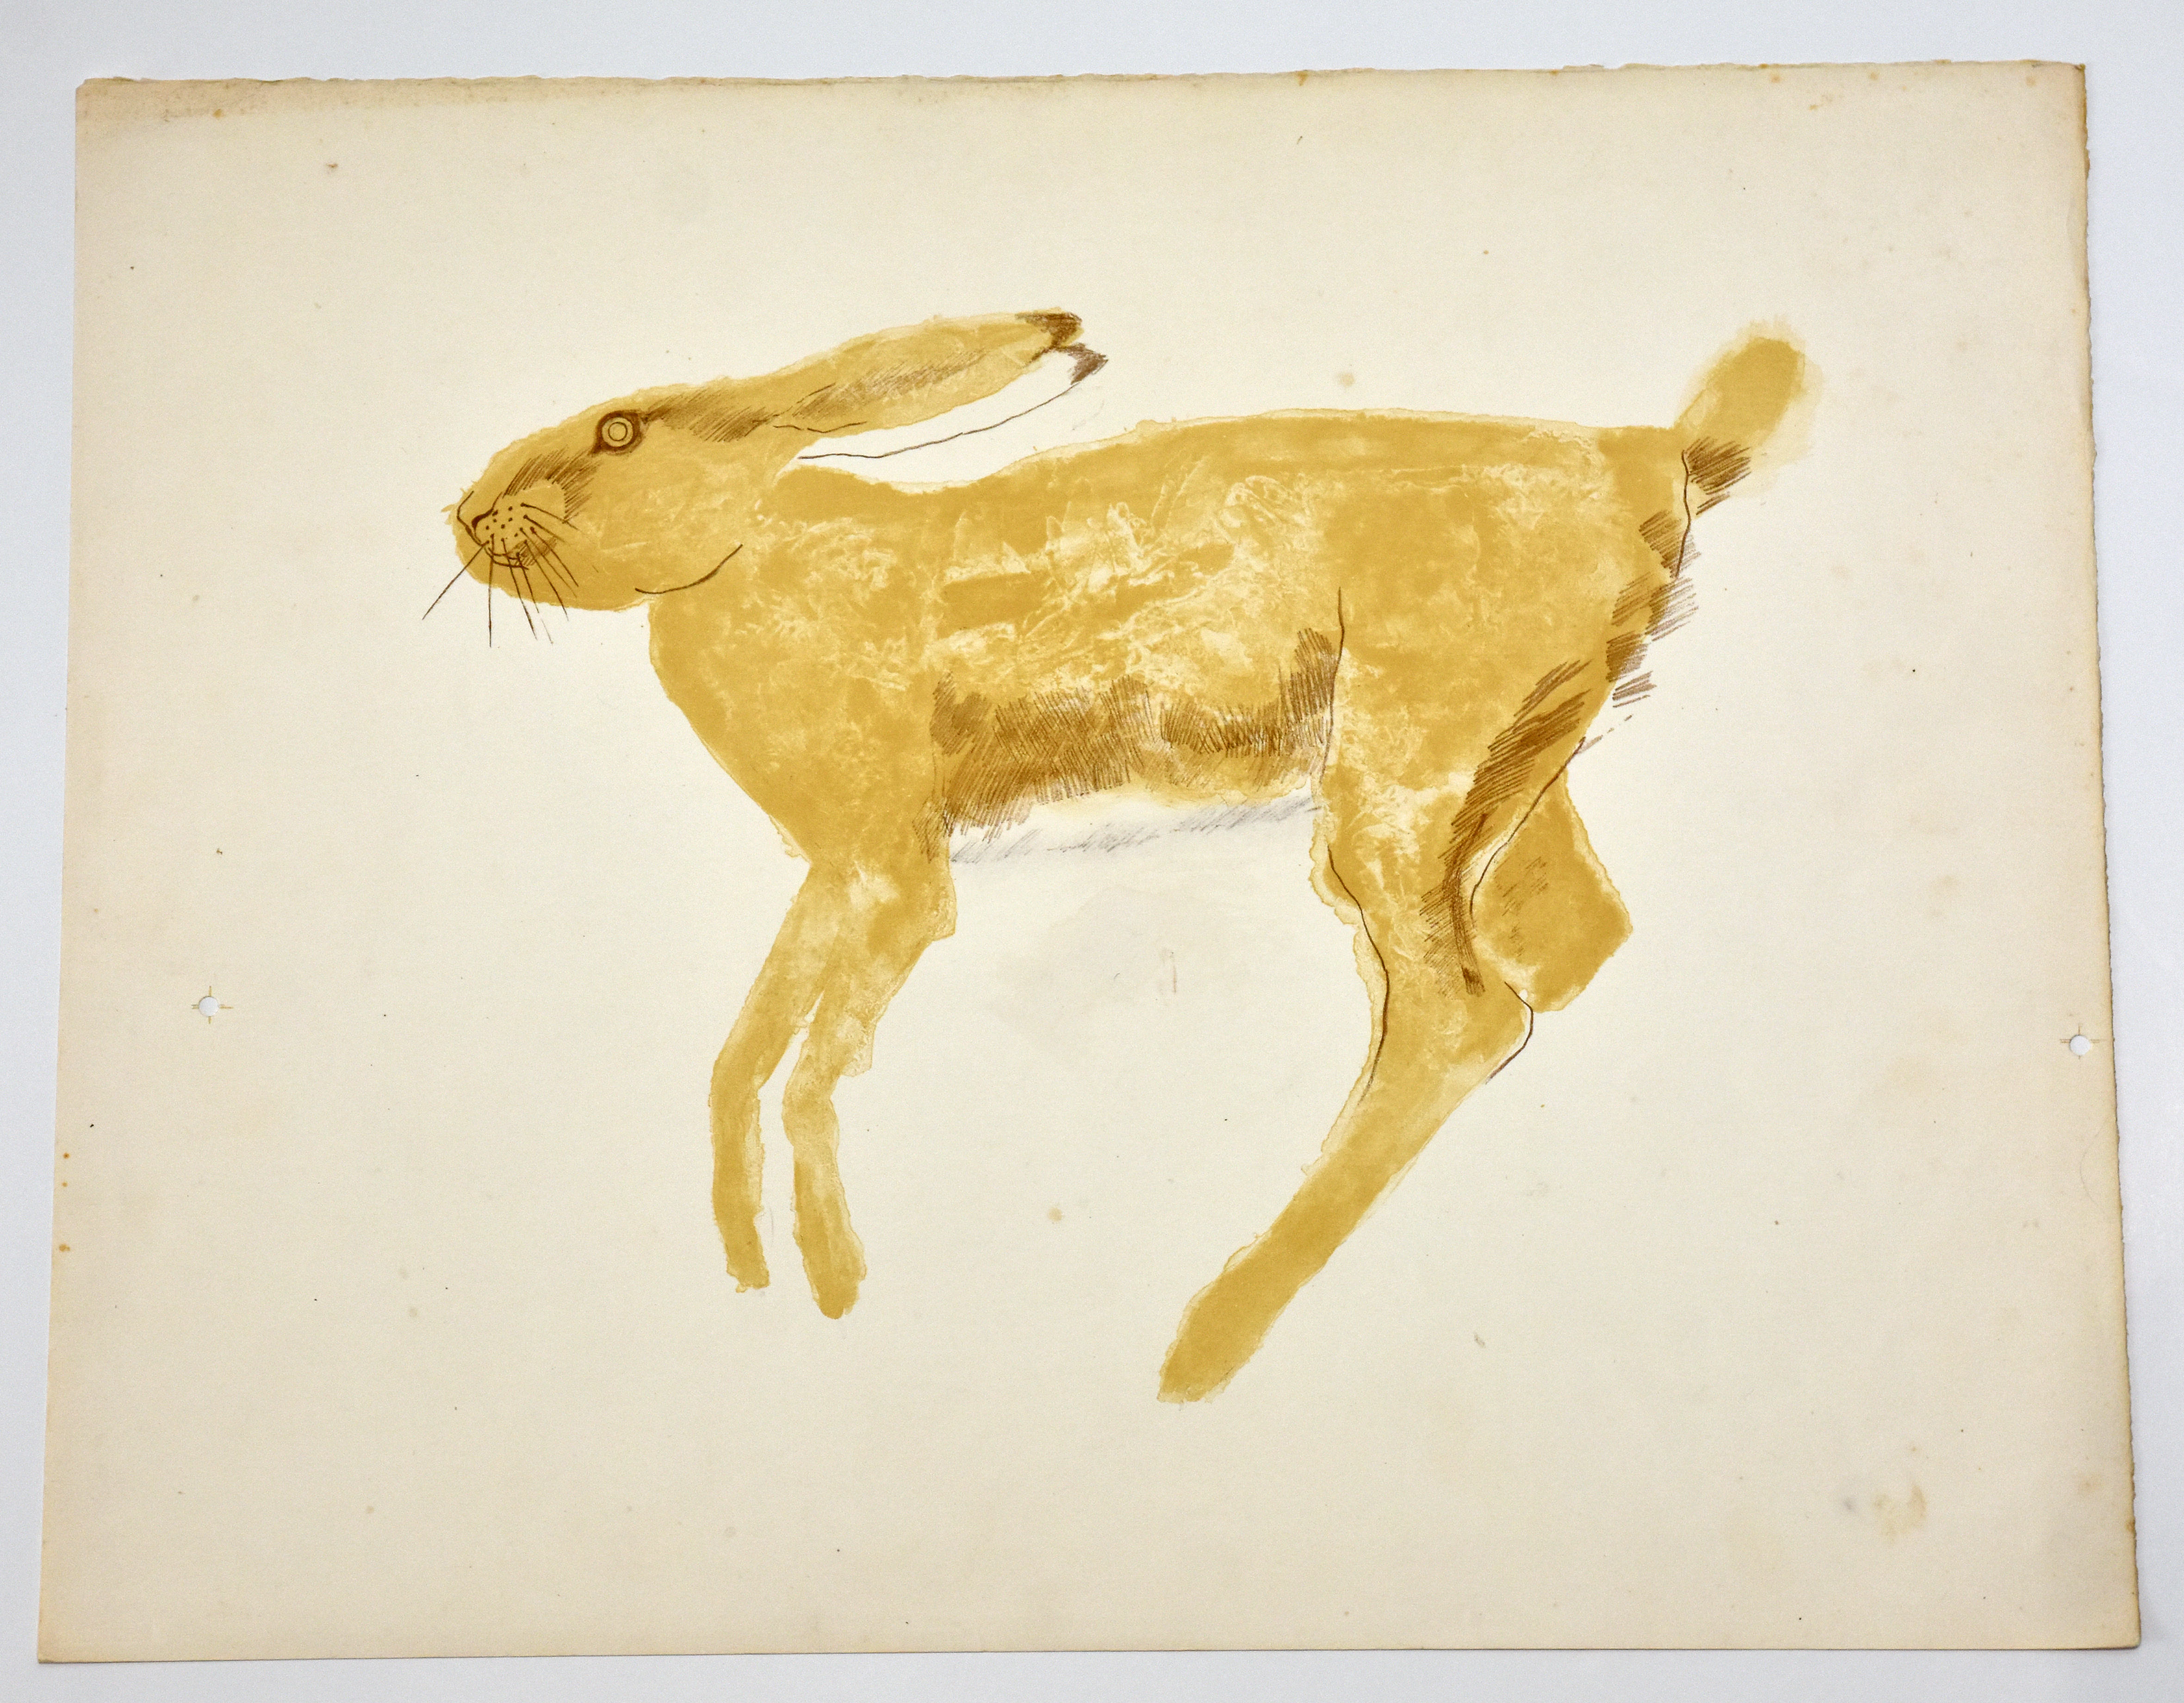 A lithograph print of a rabbit